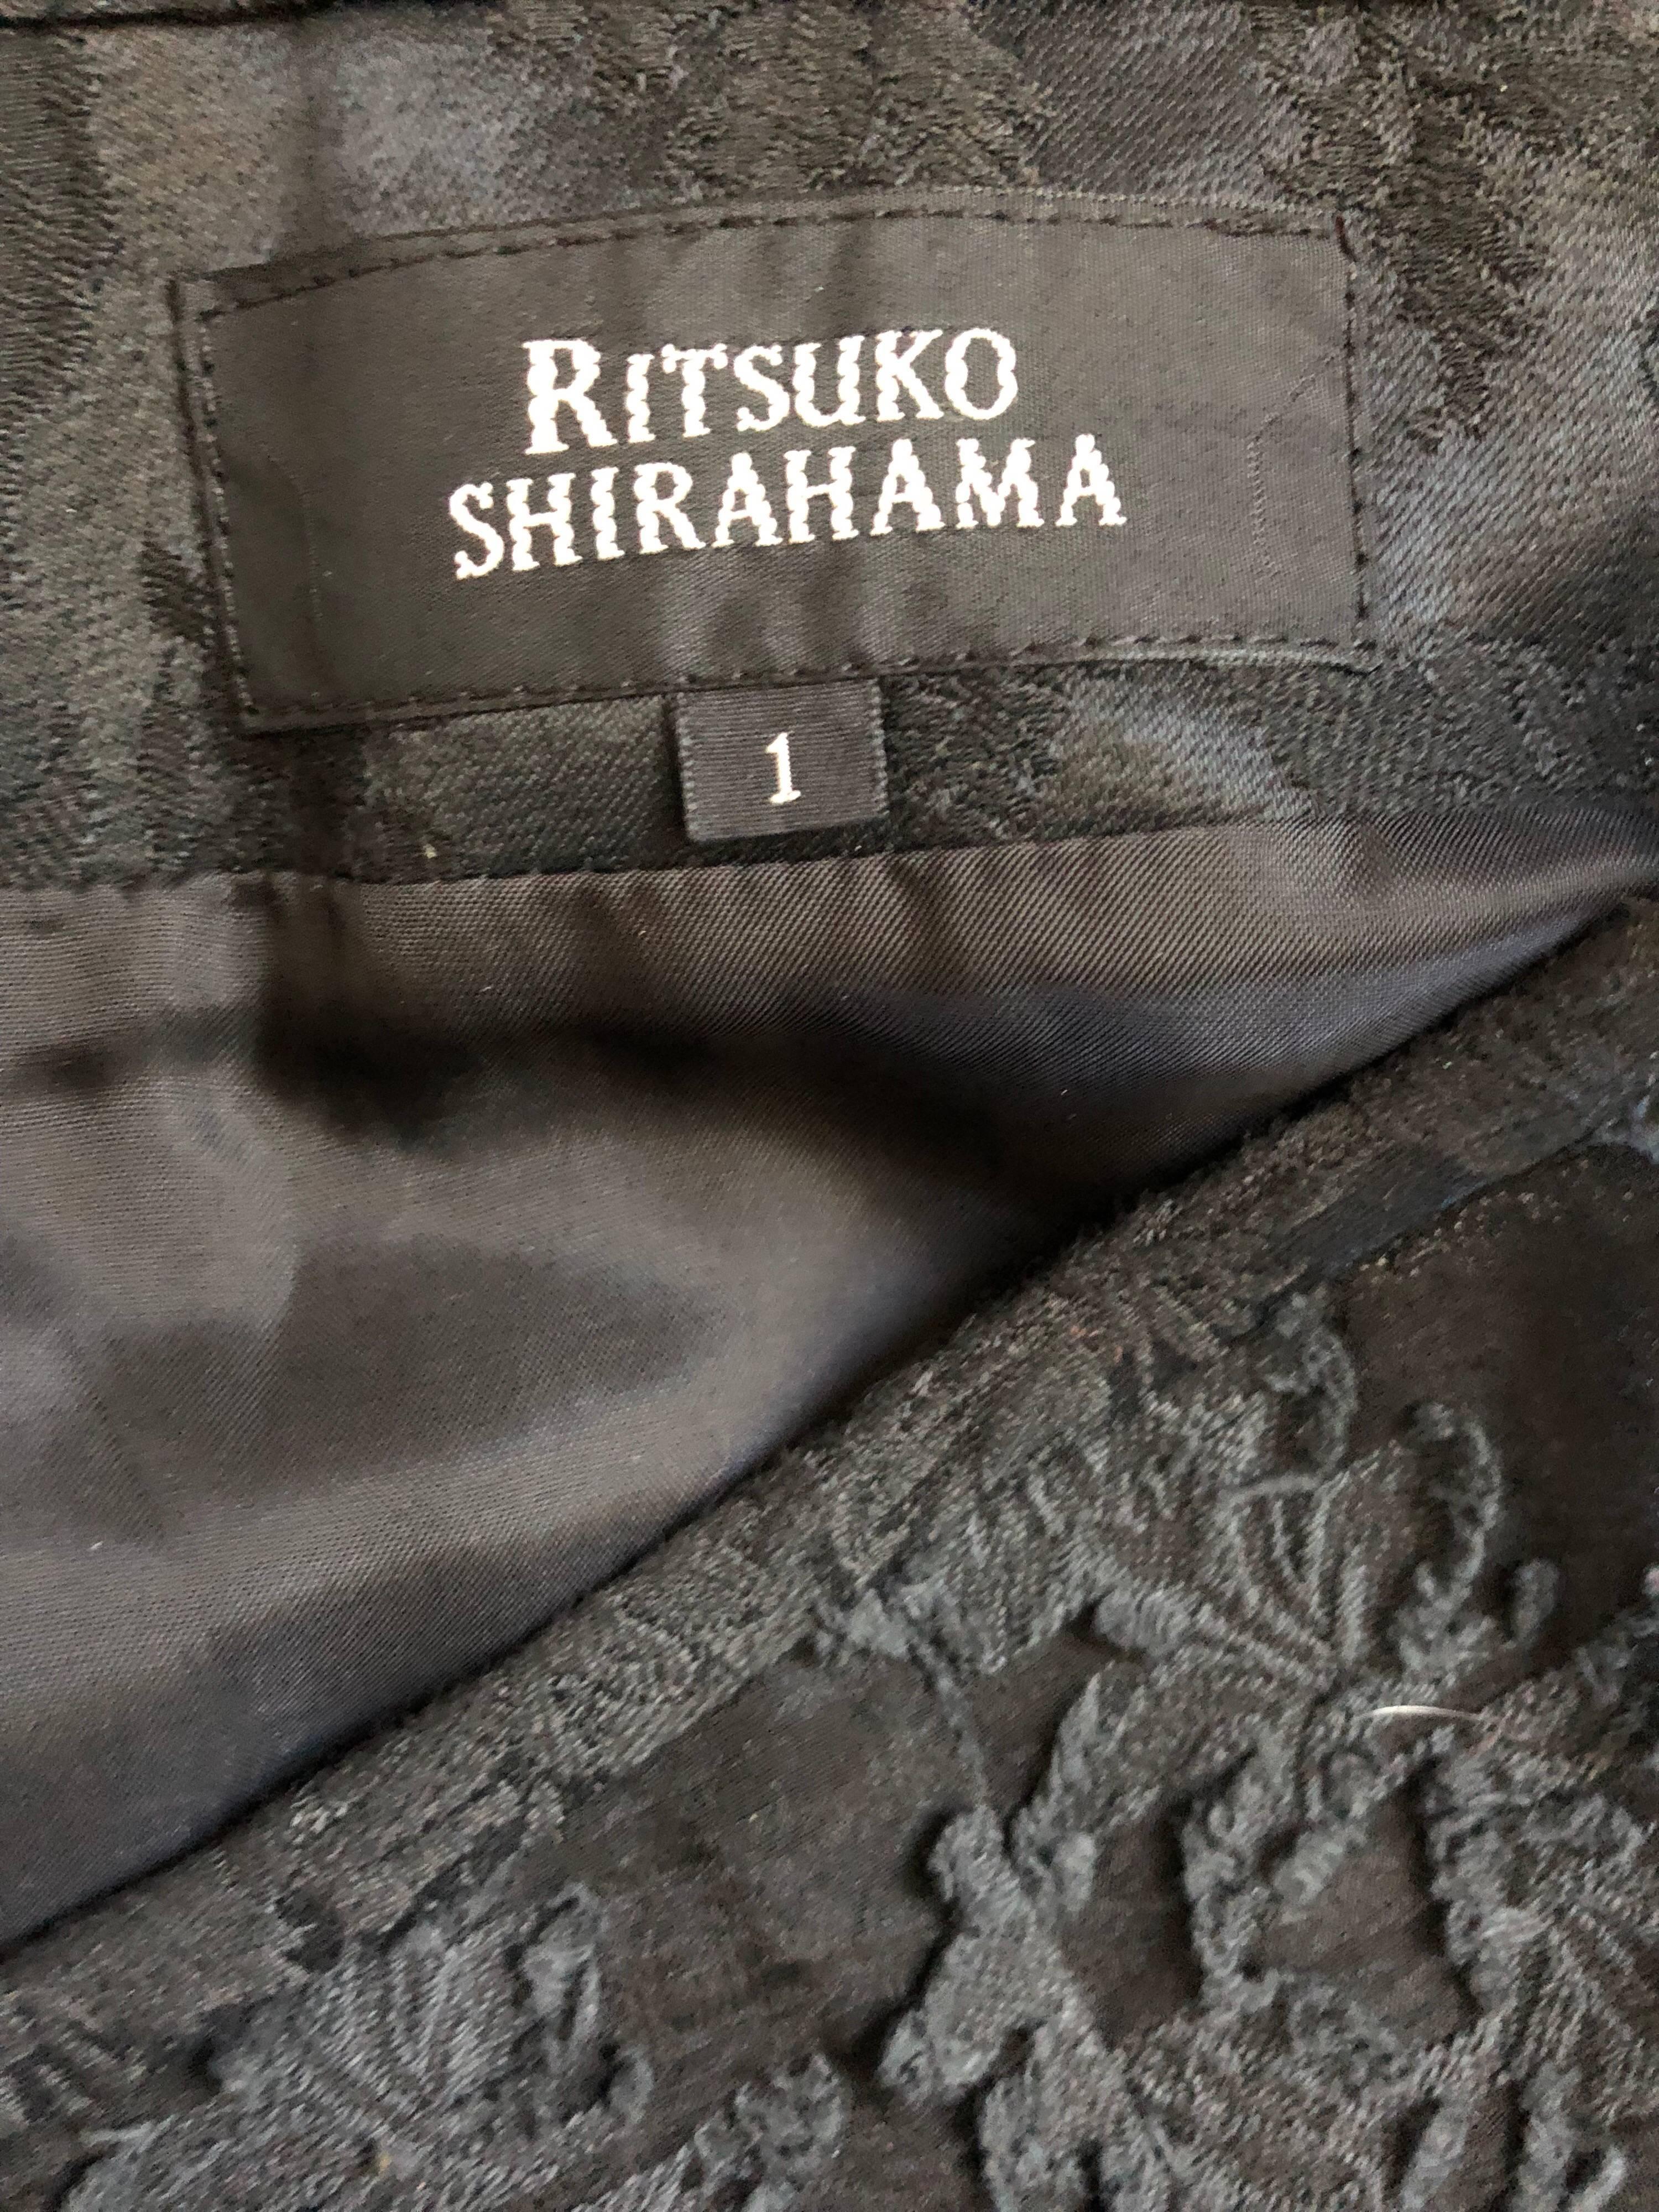 Rare Ritsuko Shirahama 1990s Black Lace Avant Garde Japanese Vintage 90s Skirt 6